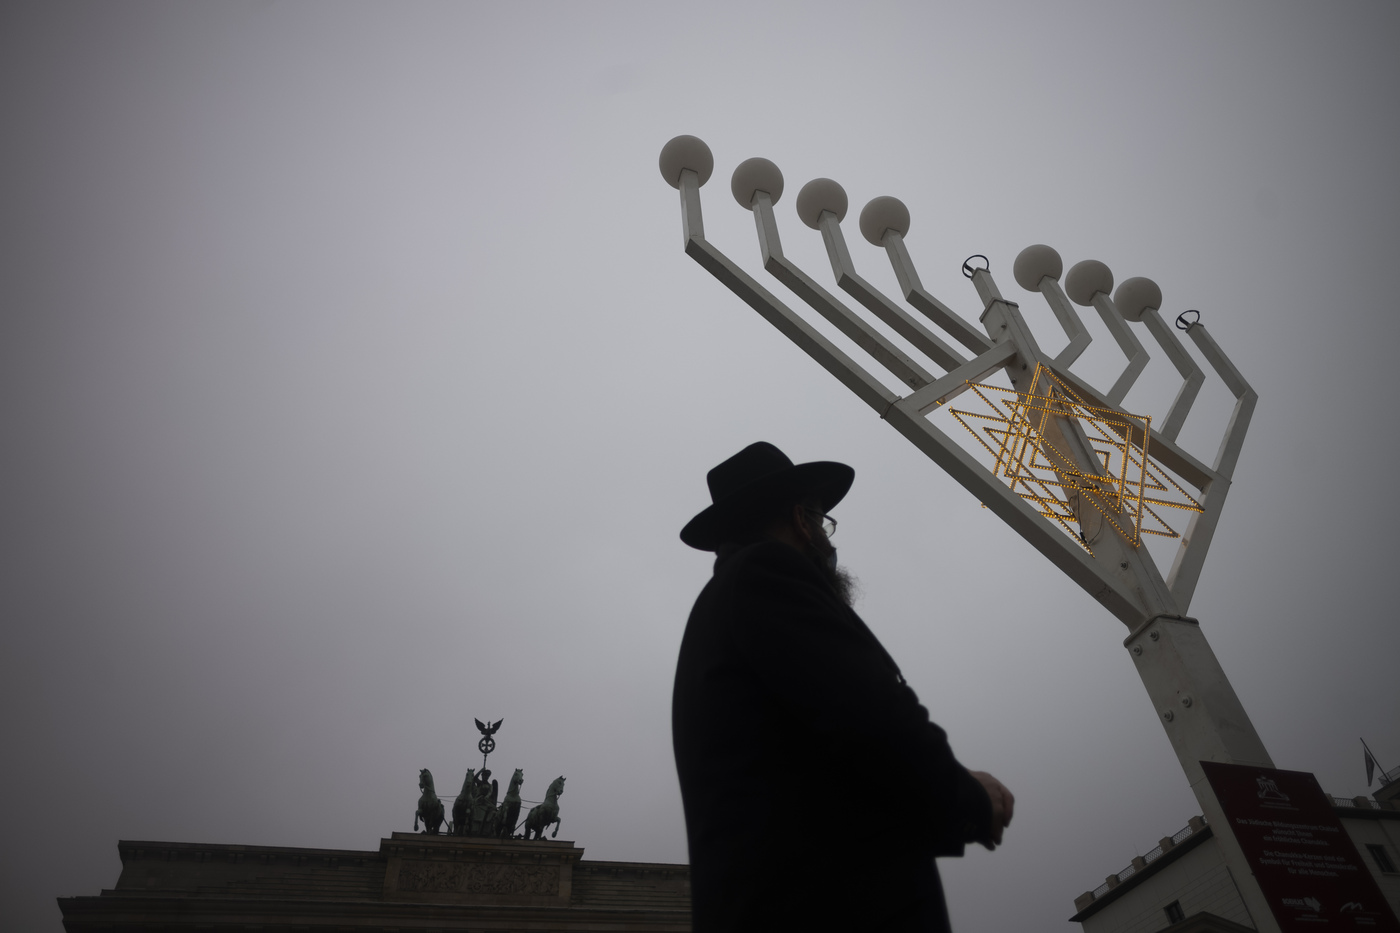 Rabbi Yehuda Teichtal inspects a giant Hanukkah Menorah, set up by the Jewish Chabad Educational Center ahead of the Jewish Hanukkah holiday, at the Pariser Platz in Berlin, Germany, Thursday, Dec. 10, 2020. (AP Photo/Markus Schreiber)